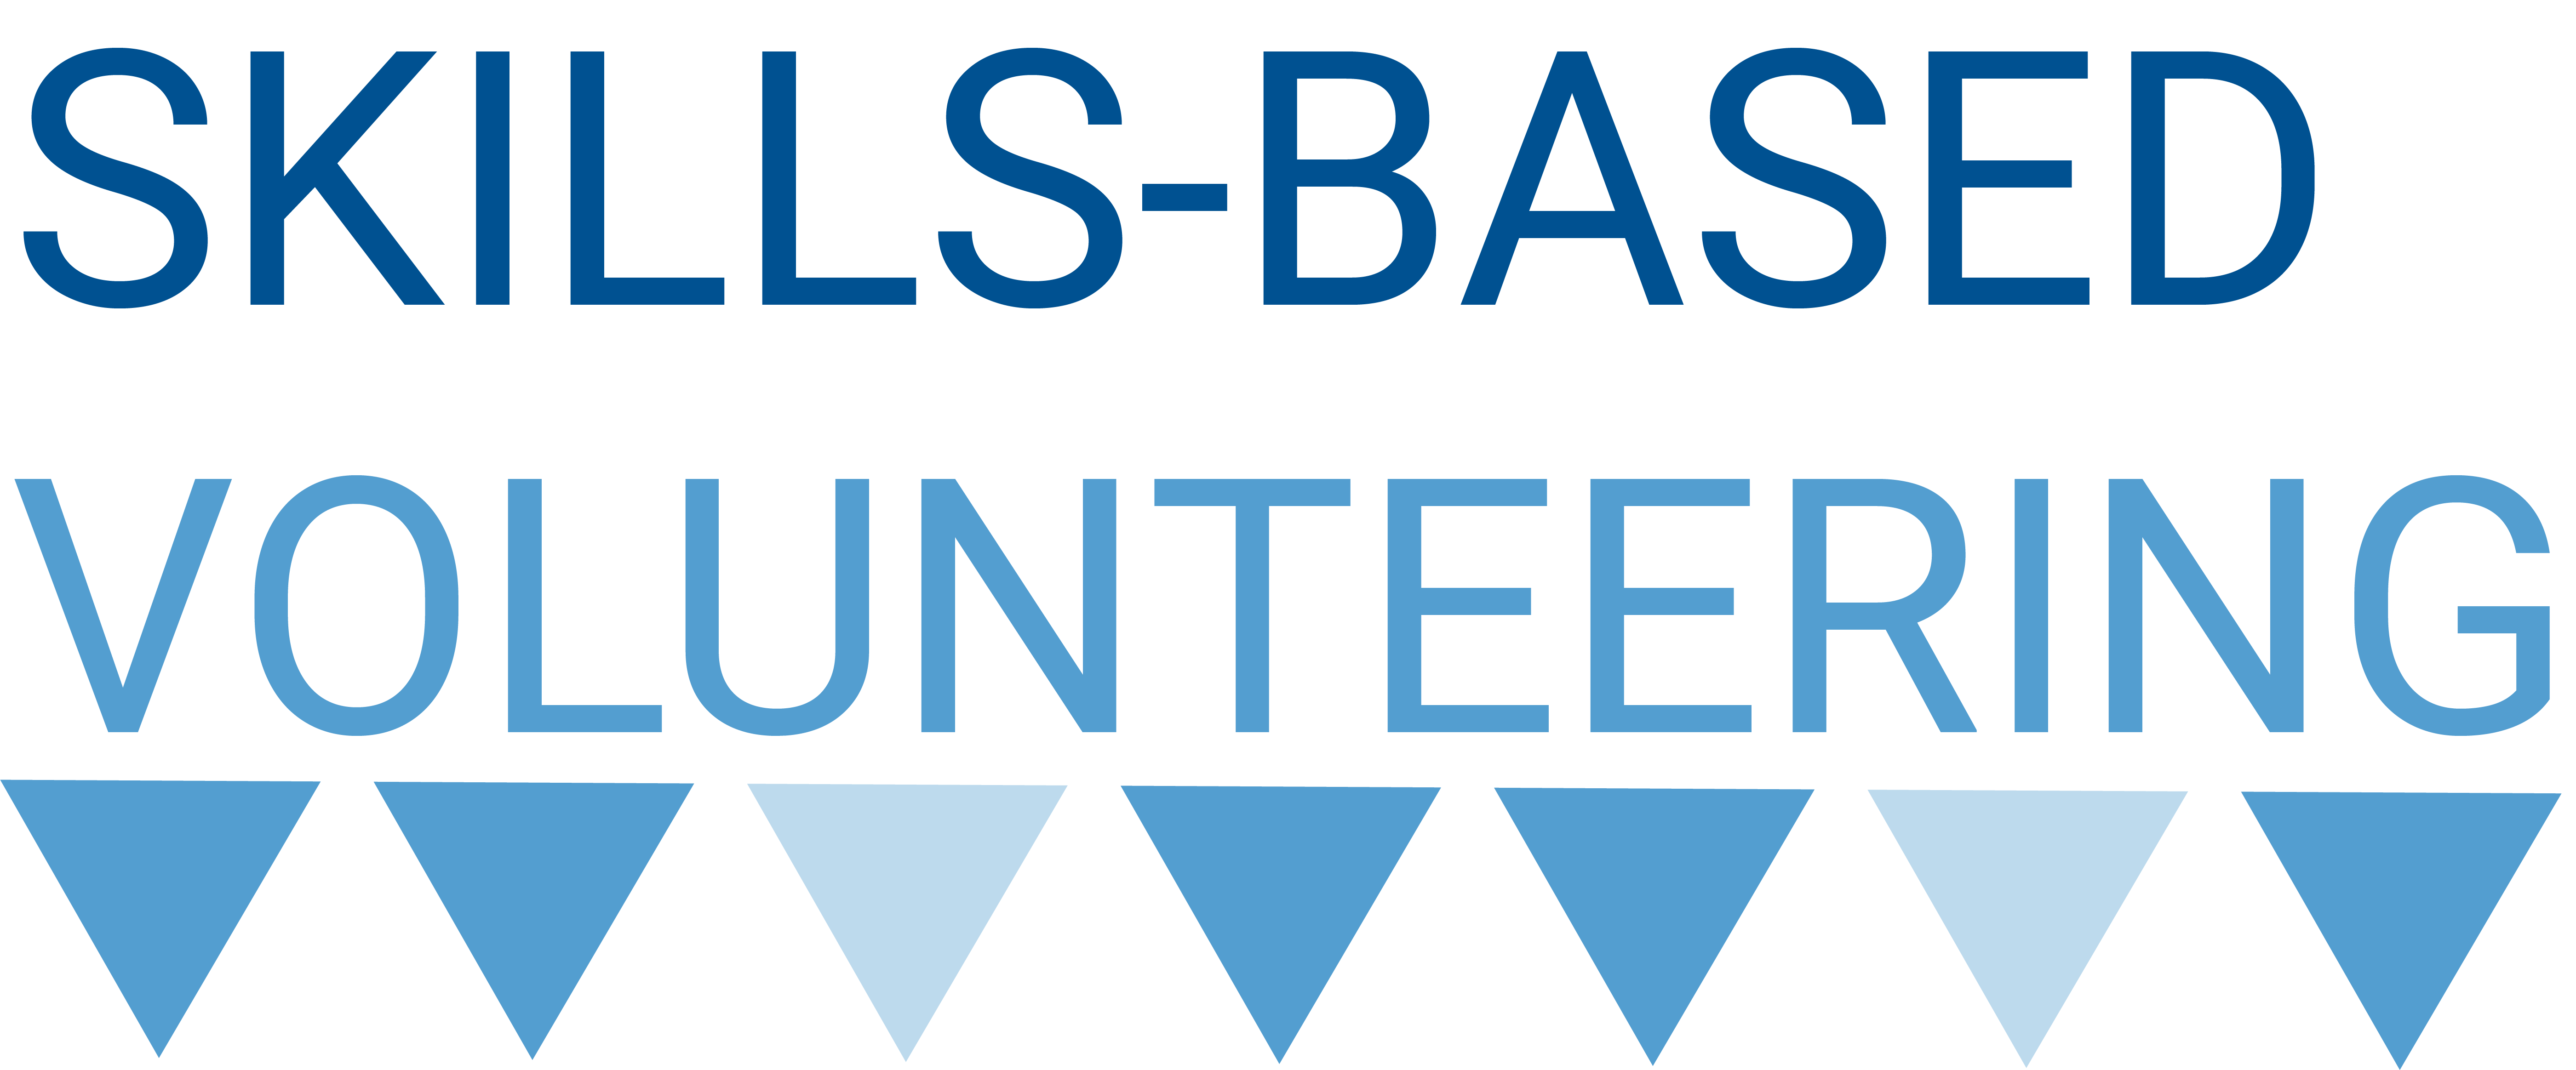 Graphic that says Skills-Based Volunteering